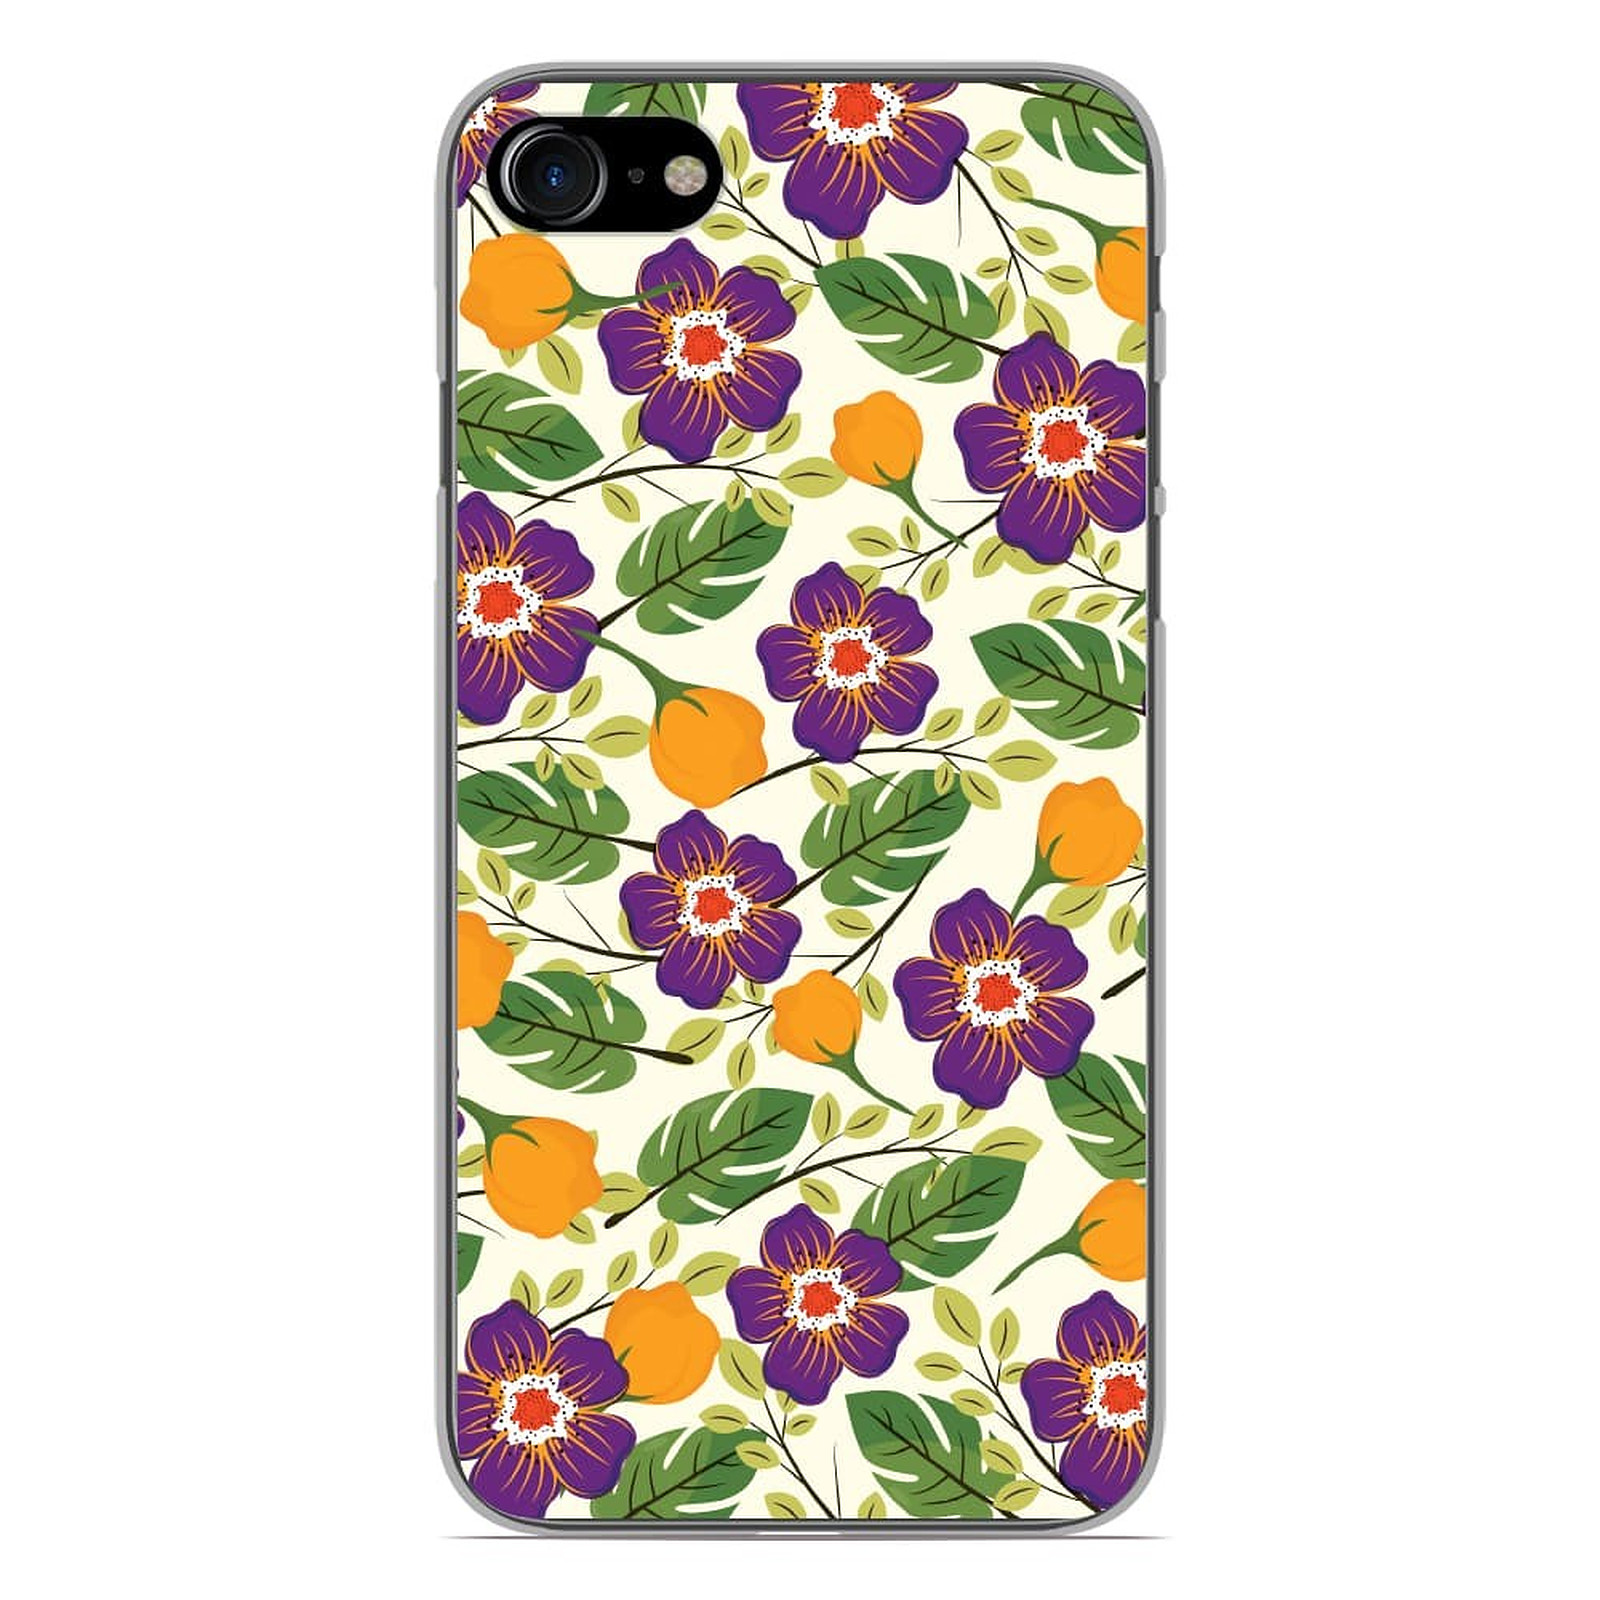 1001 Coques Coque silicone gel Apple iPhone 8 motif Fleurs Violettes - Coque telephone 1001Coques